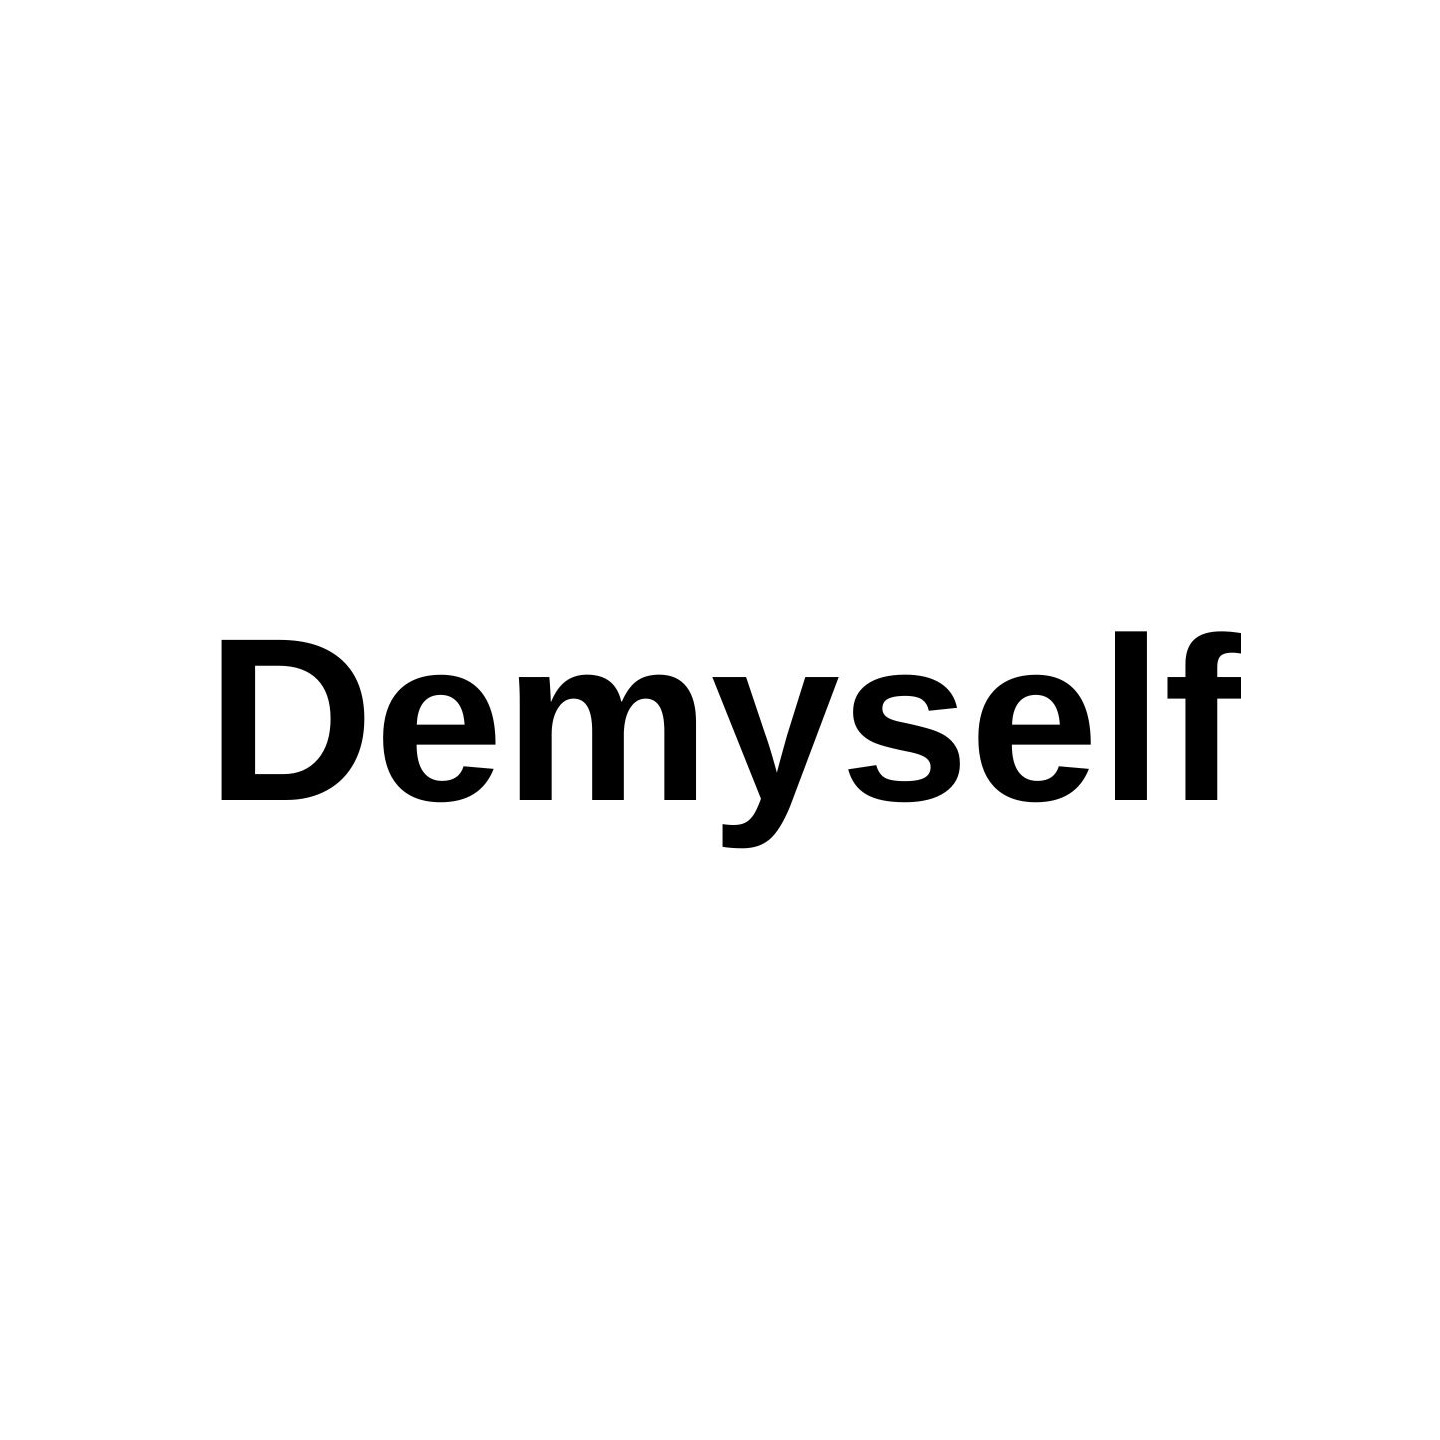 Demyself